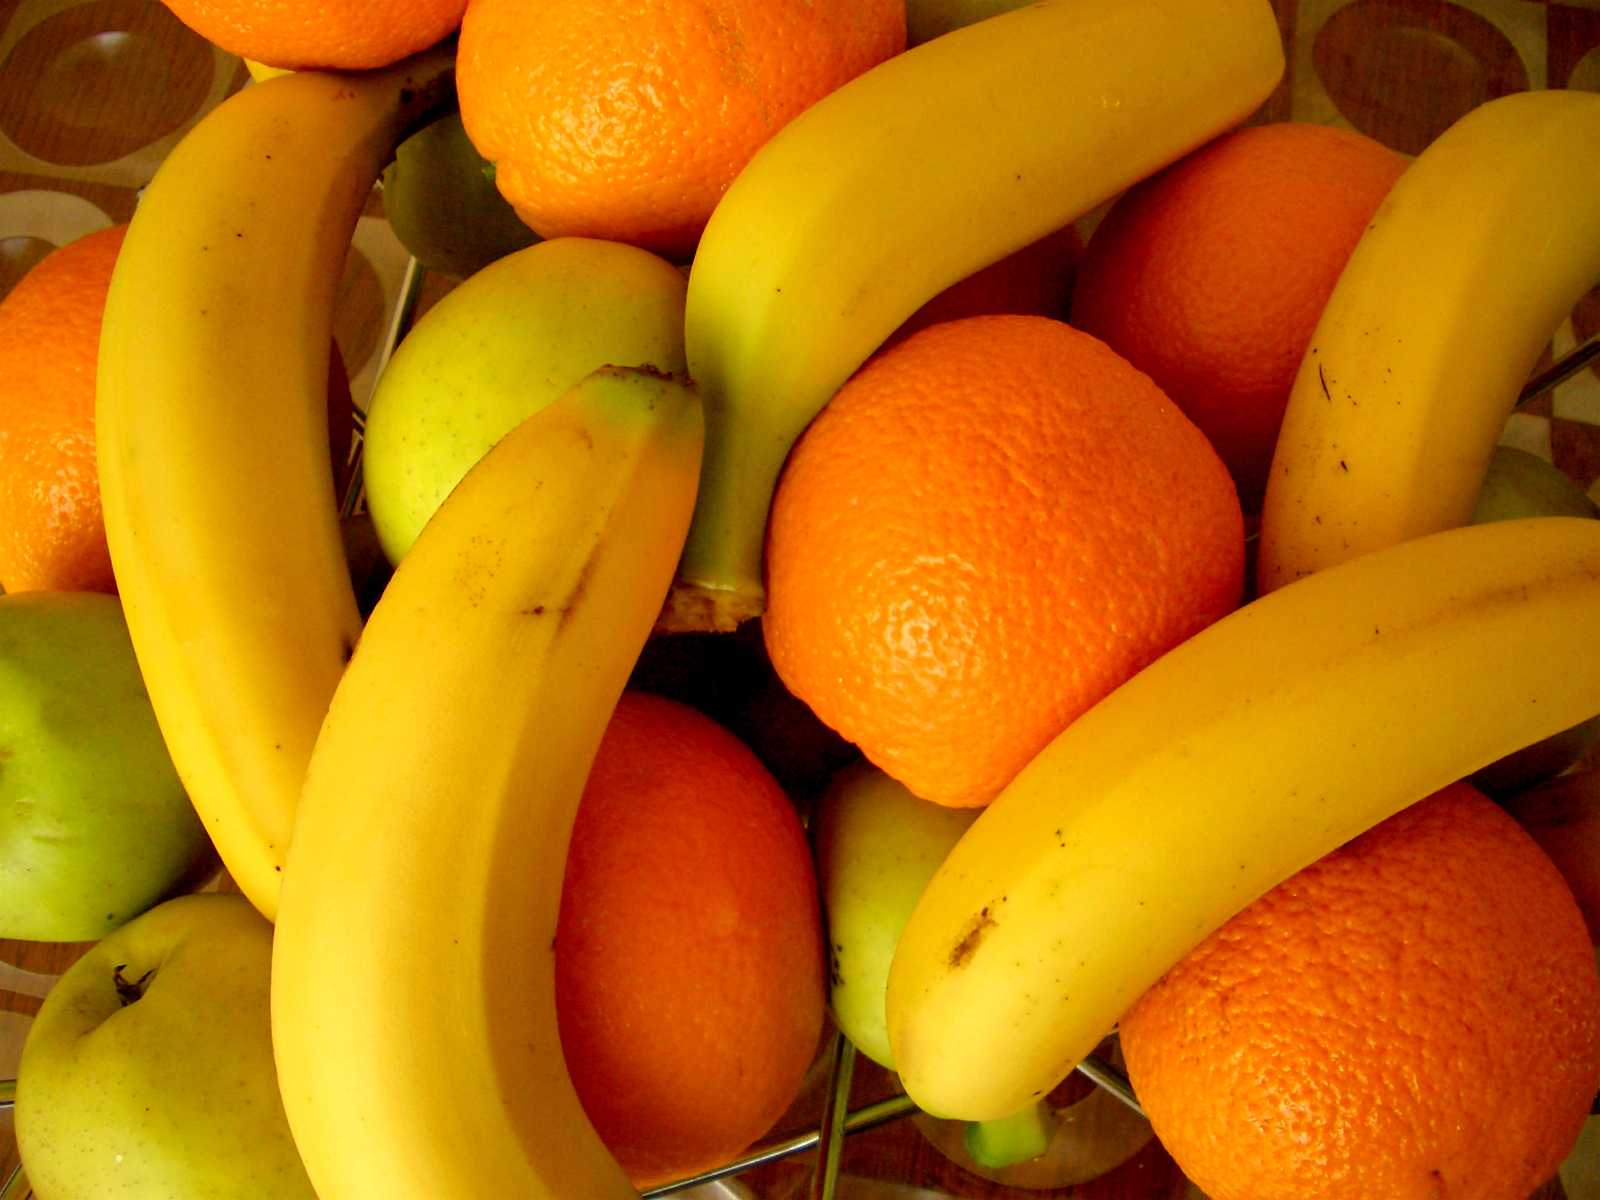 Download wallpaper: Fruits, Oranges and Bananas, download photo ...